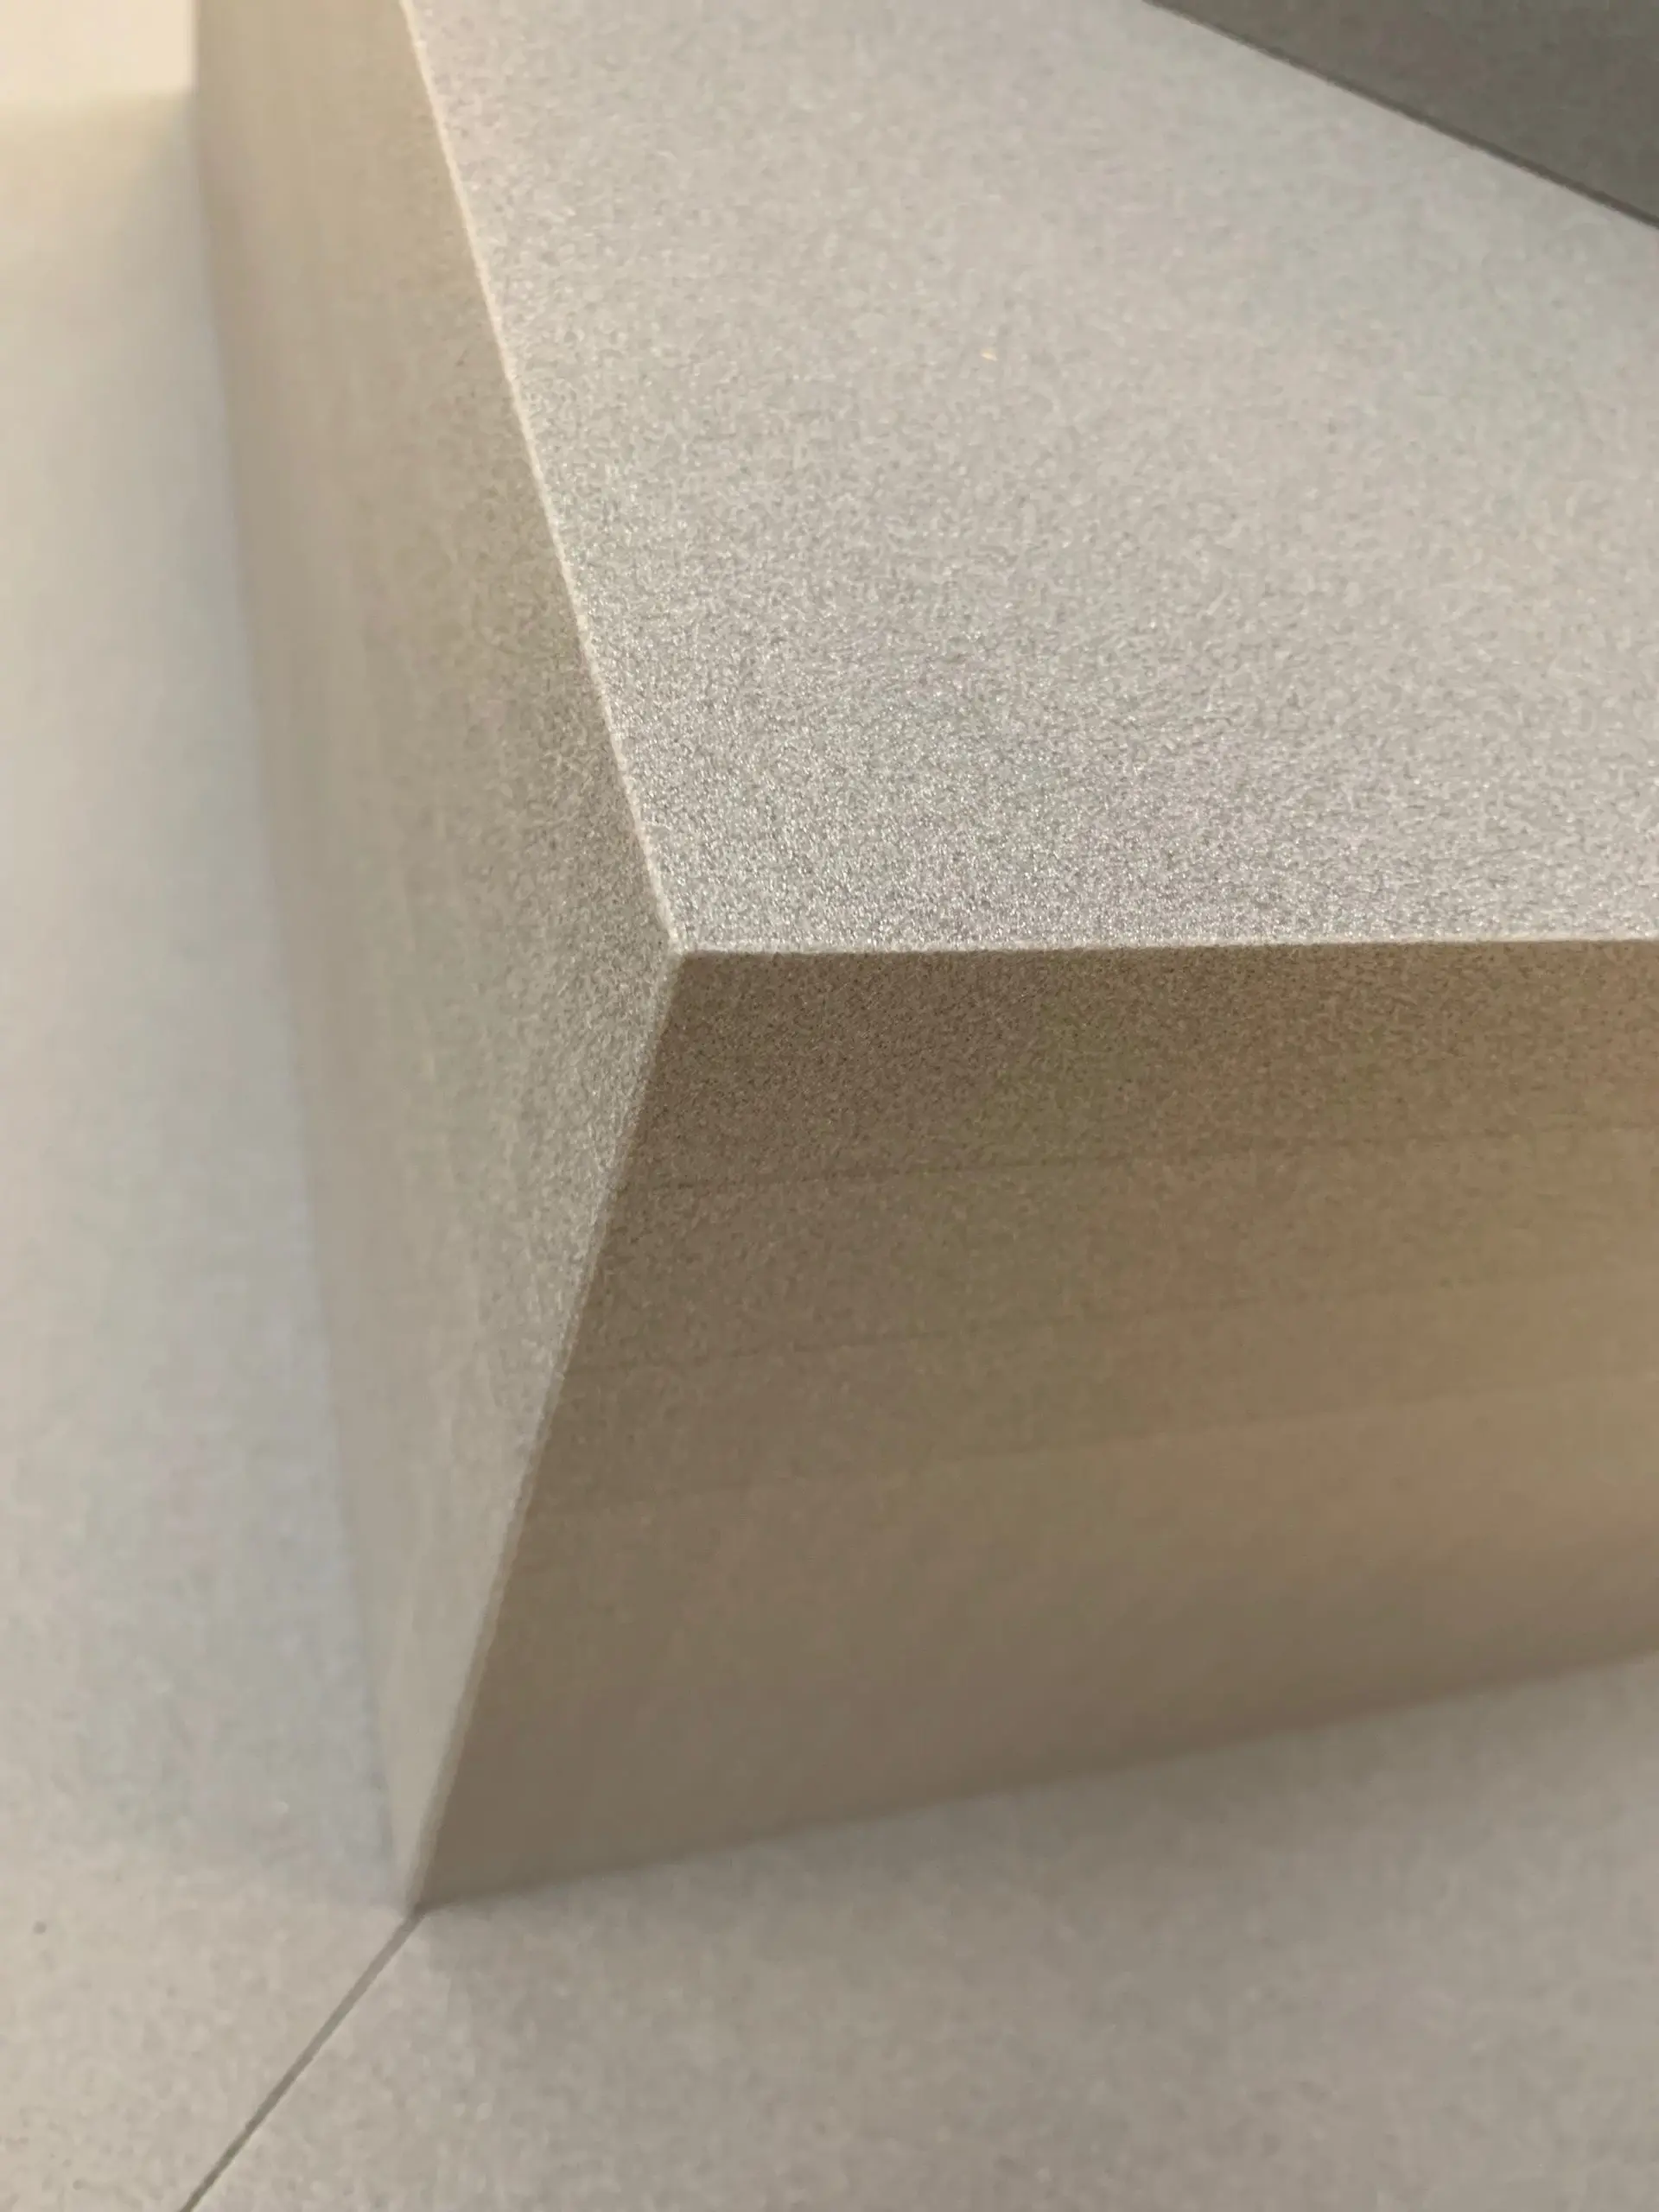 bespoke foam blocks can be cut to any size